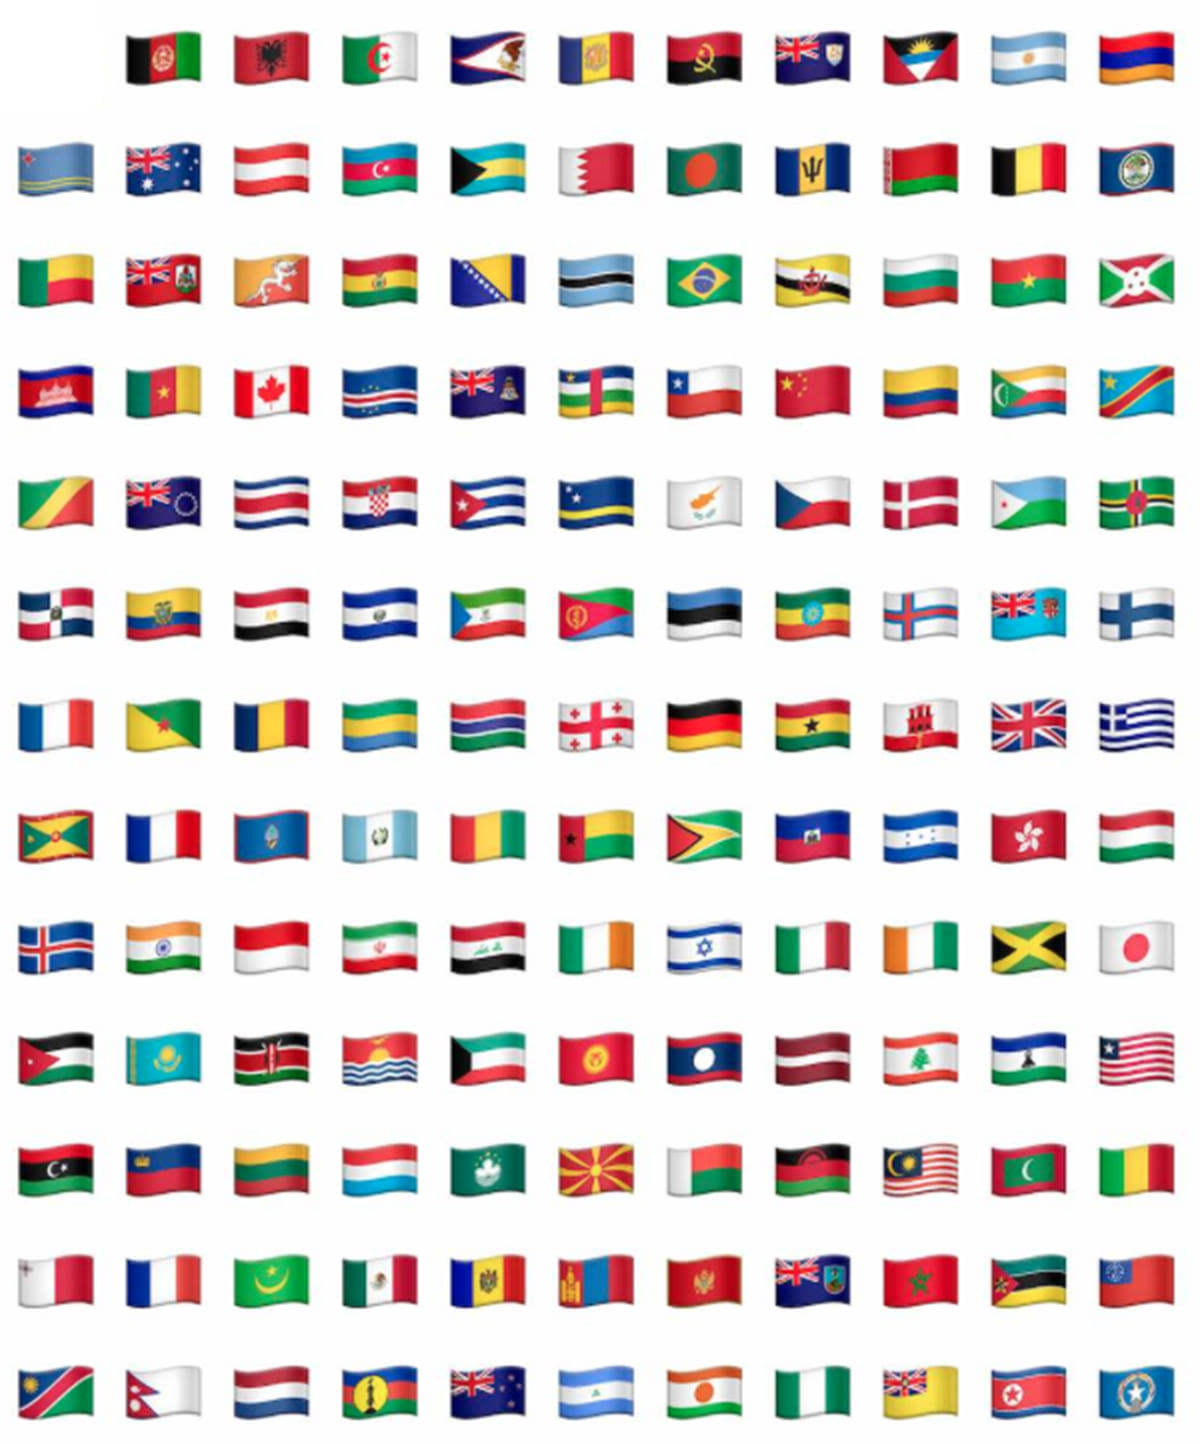 emoji国旗对照表图片